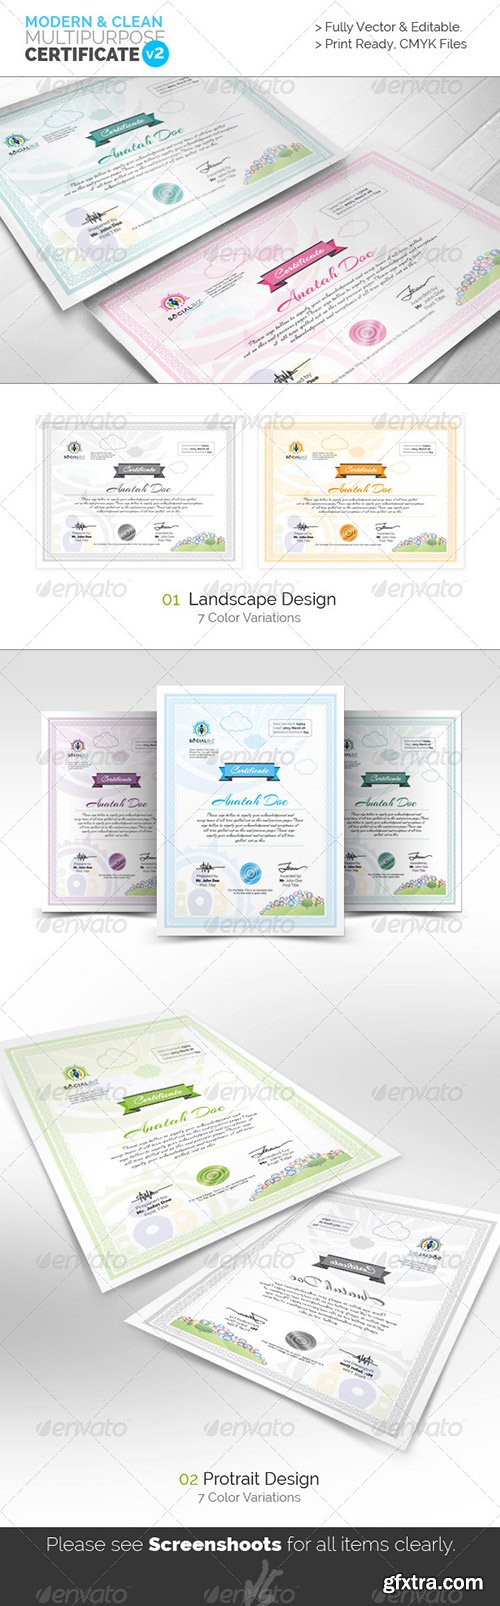 Graphicriver - Clean Multipurpose Certificates v3 5748518